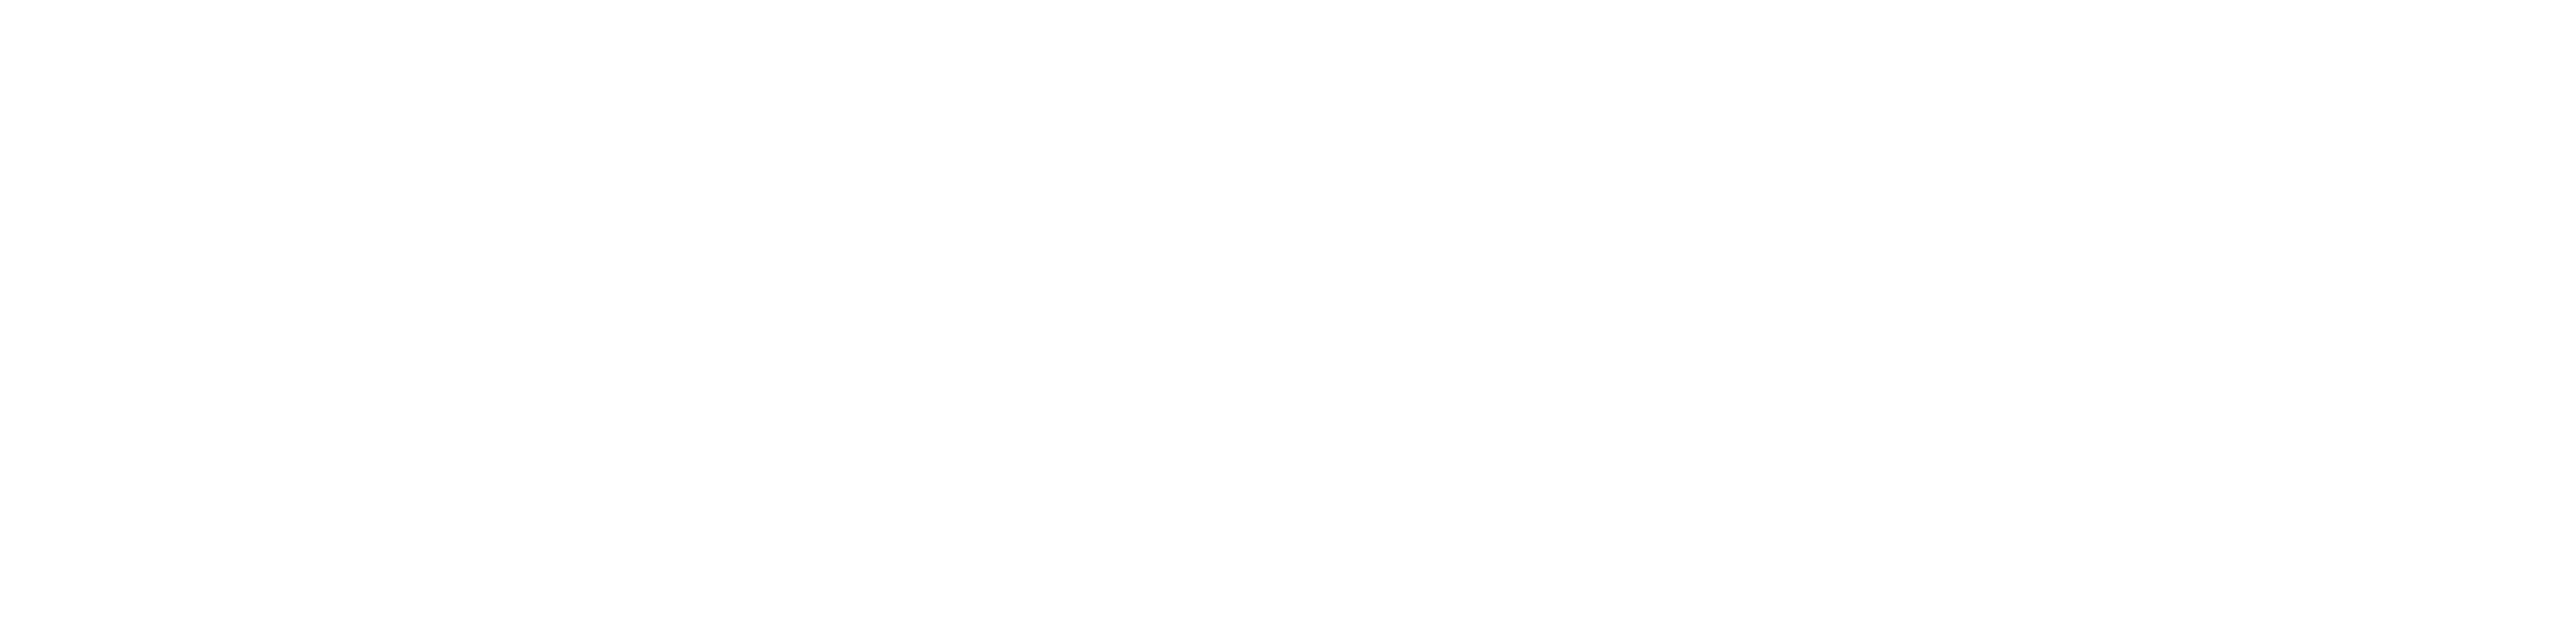 Lady Snowblood logo